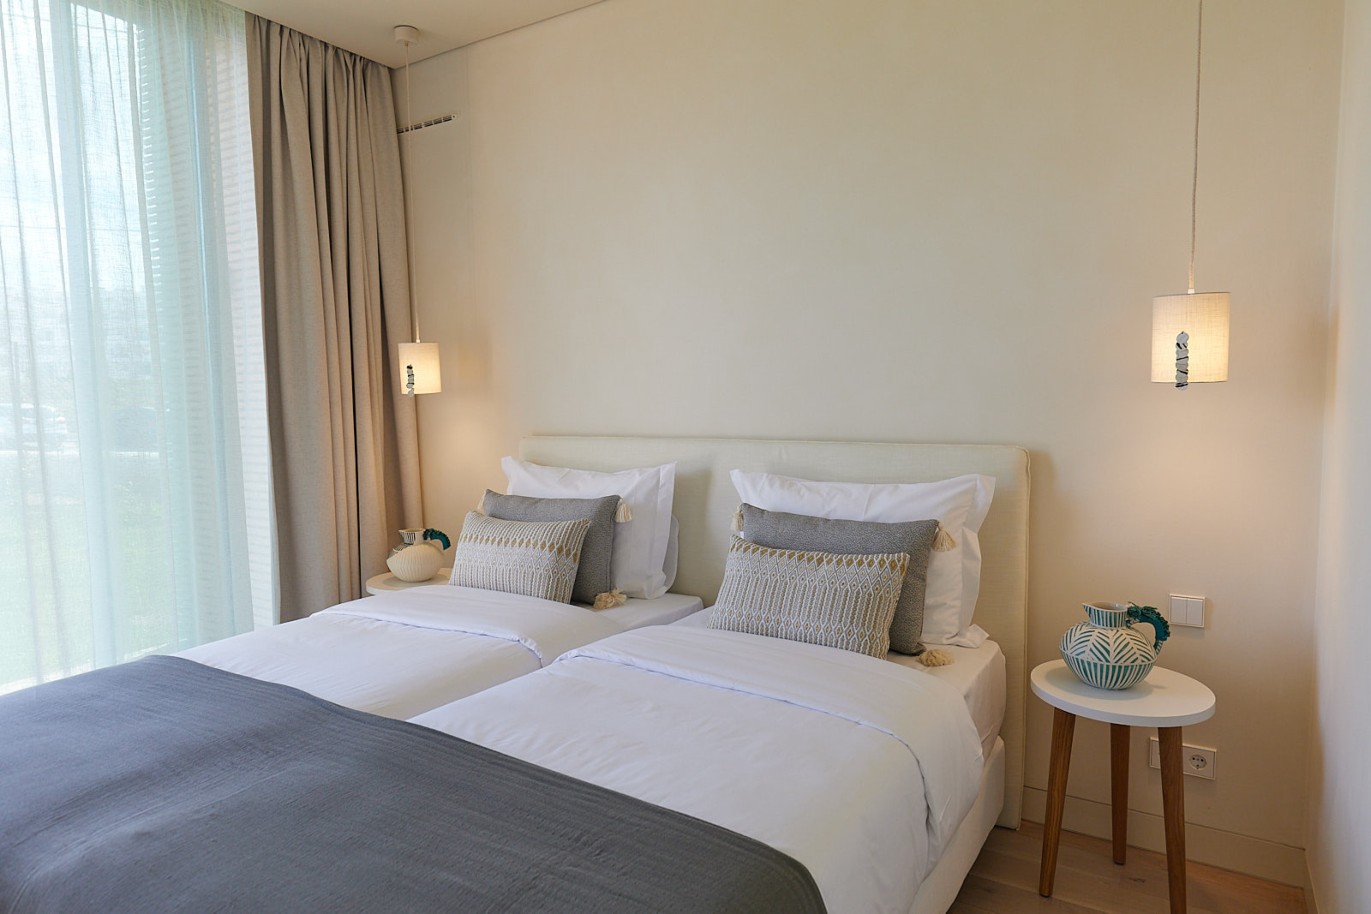 2 bedroom apartment in resort, for sale in Porches, Algarve_230550